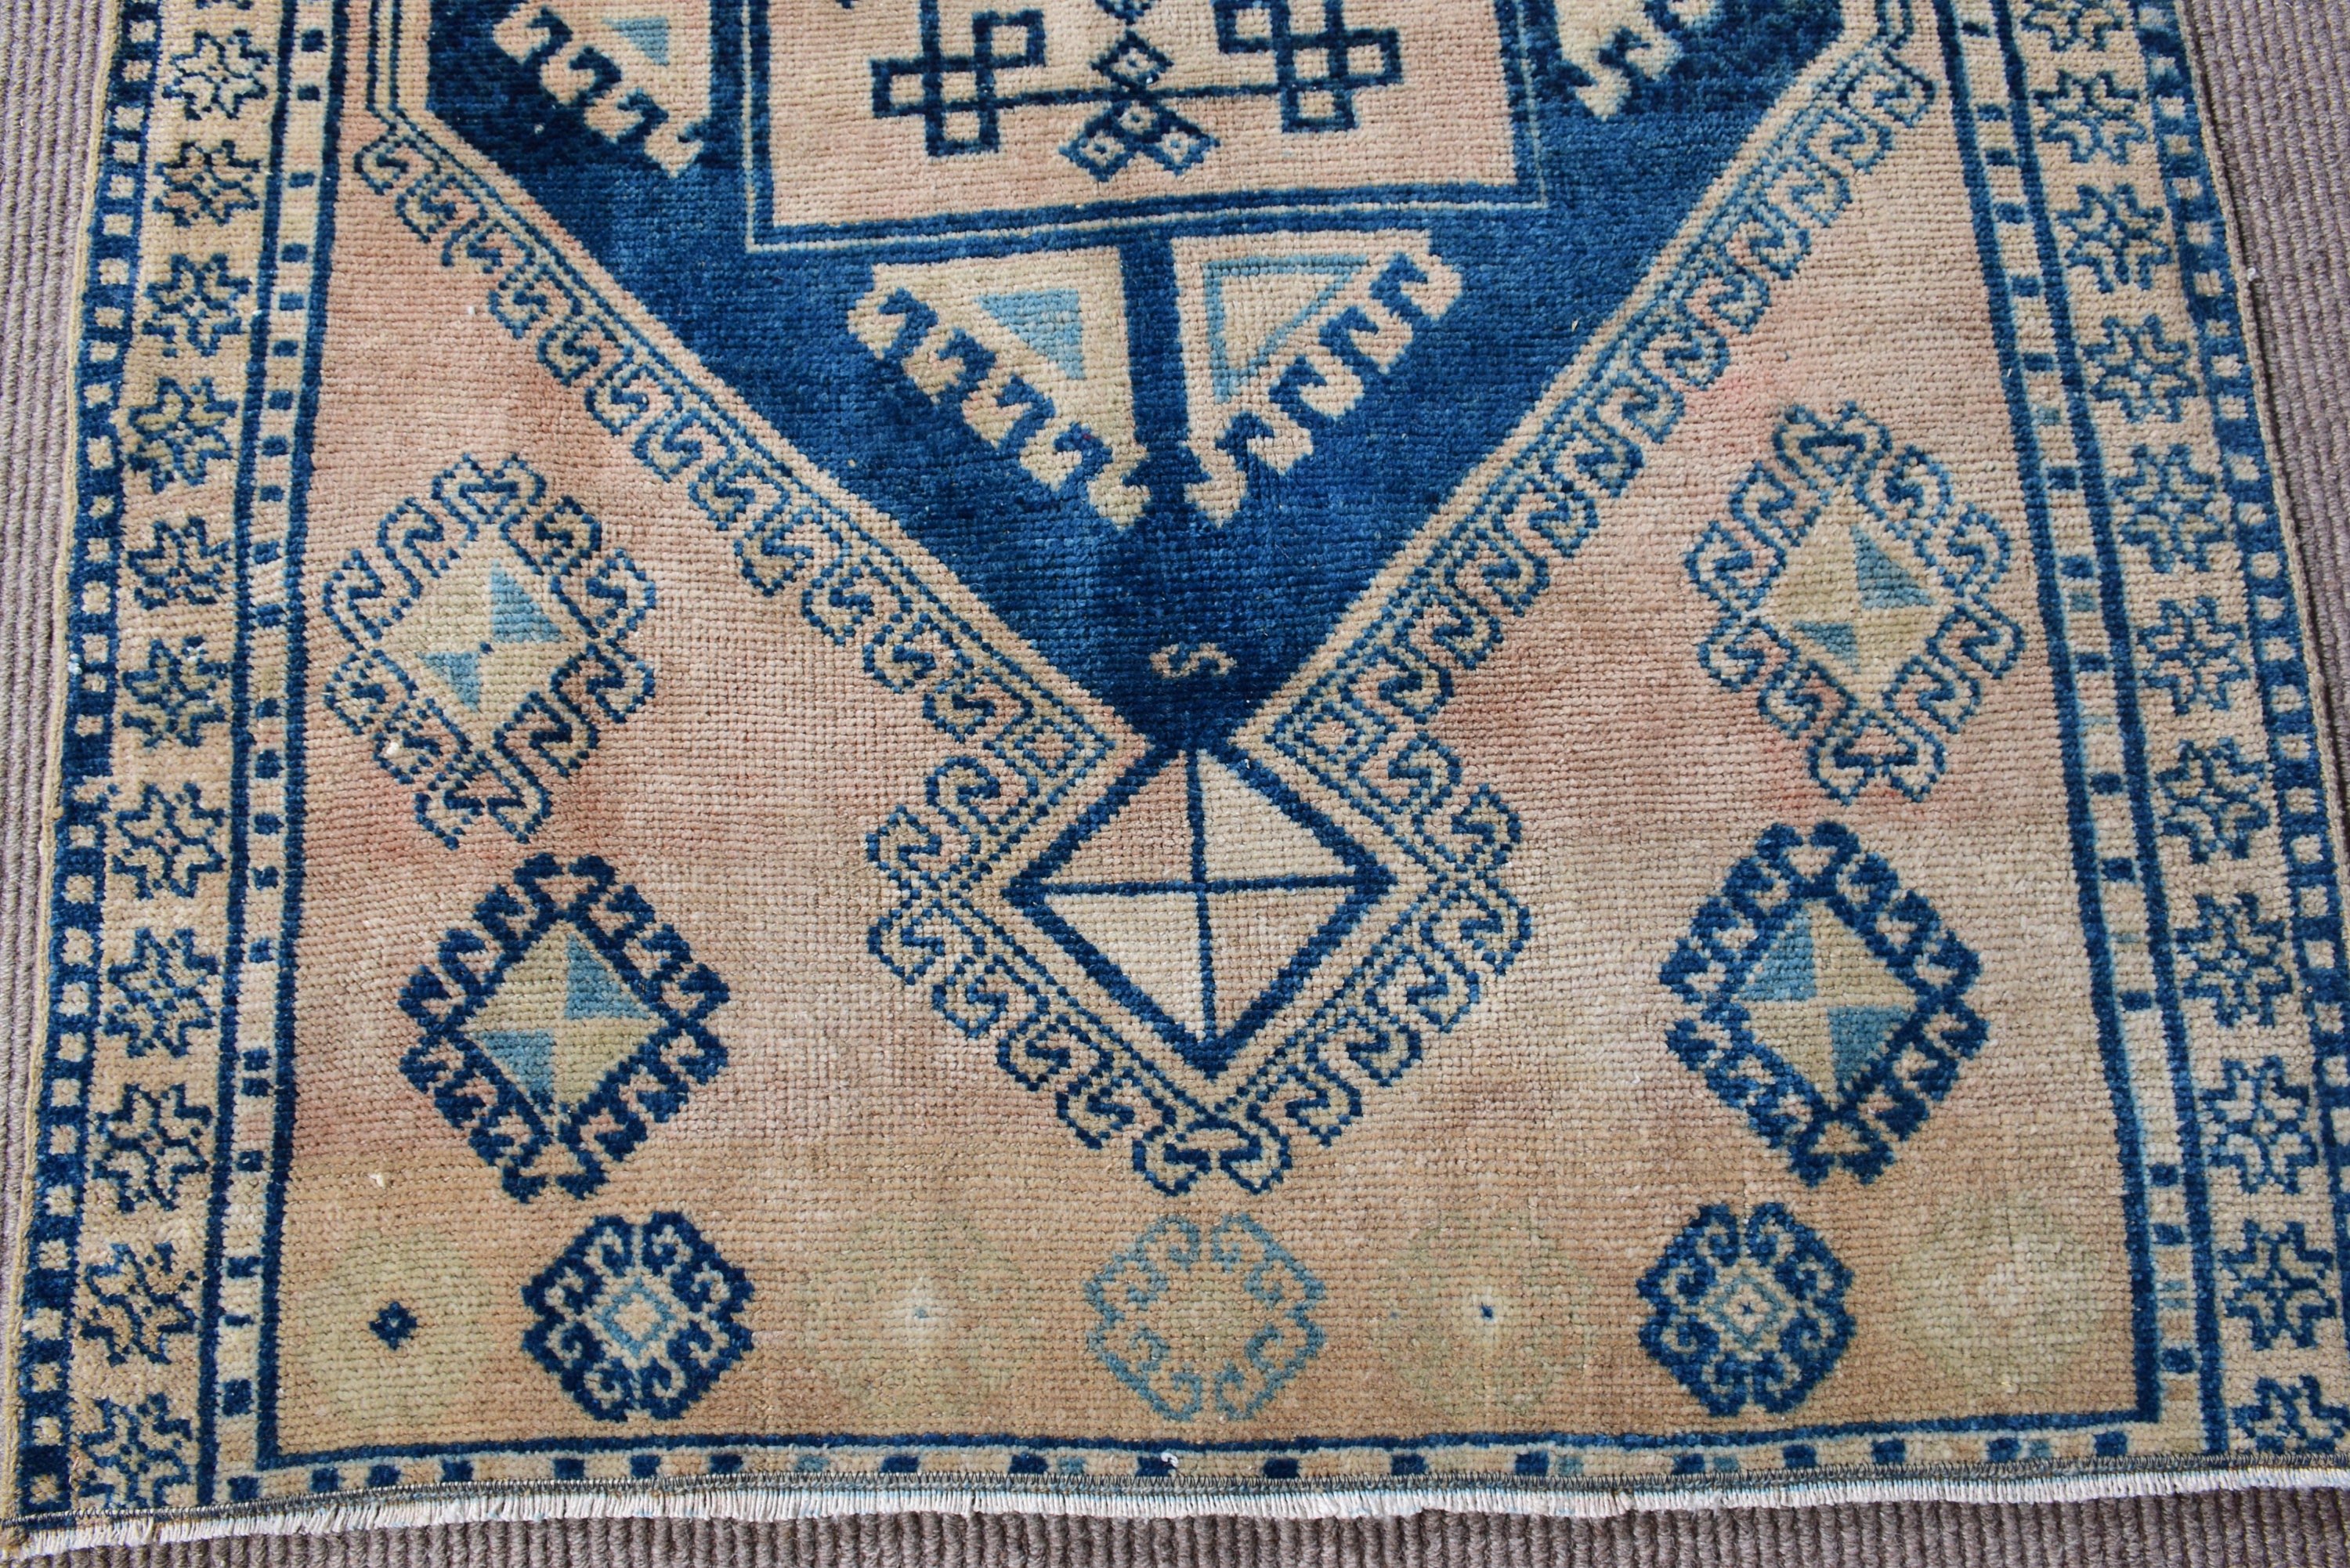 Vintage Rug, Rugs for Hallway, Turkish Rug, Handwoven Rug, Moroccan Rugs, Blue Kitchen Rug, Antique Rug, Stair Rug, 3.1x8.3 ft Runner Rug